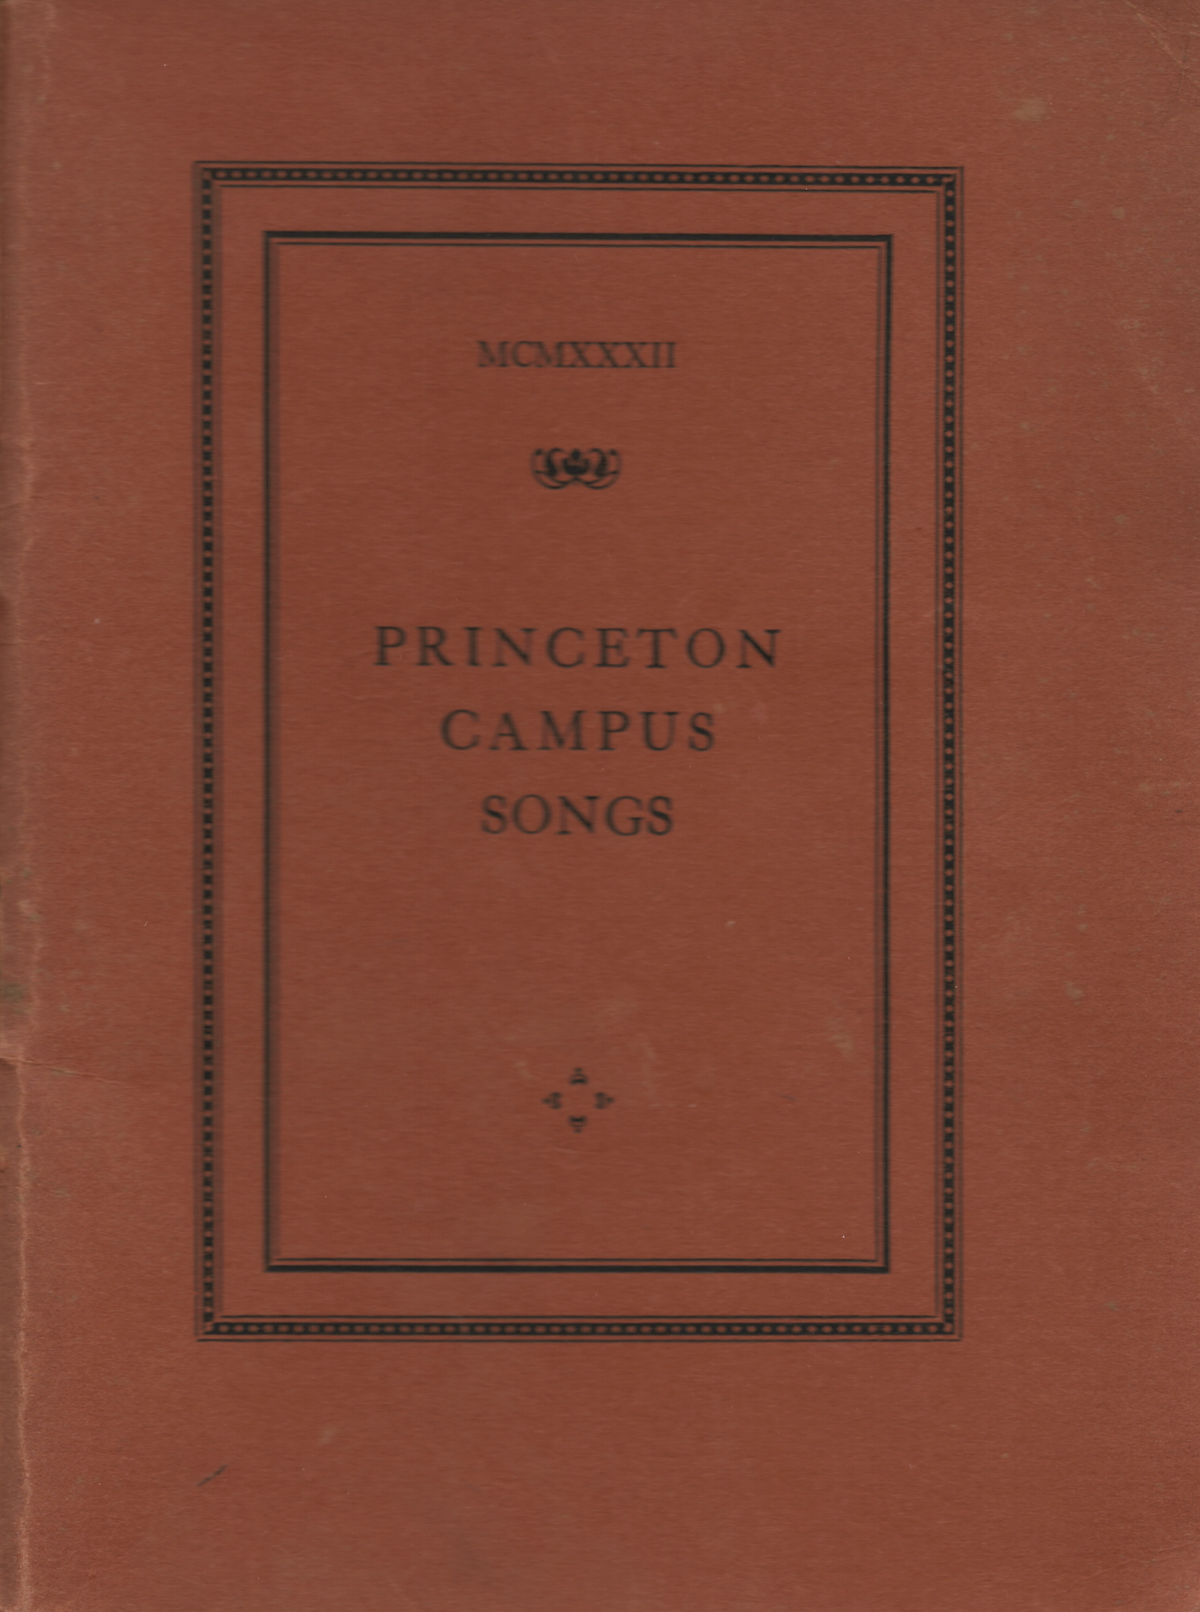 Princeton Campus Songs, 1932